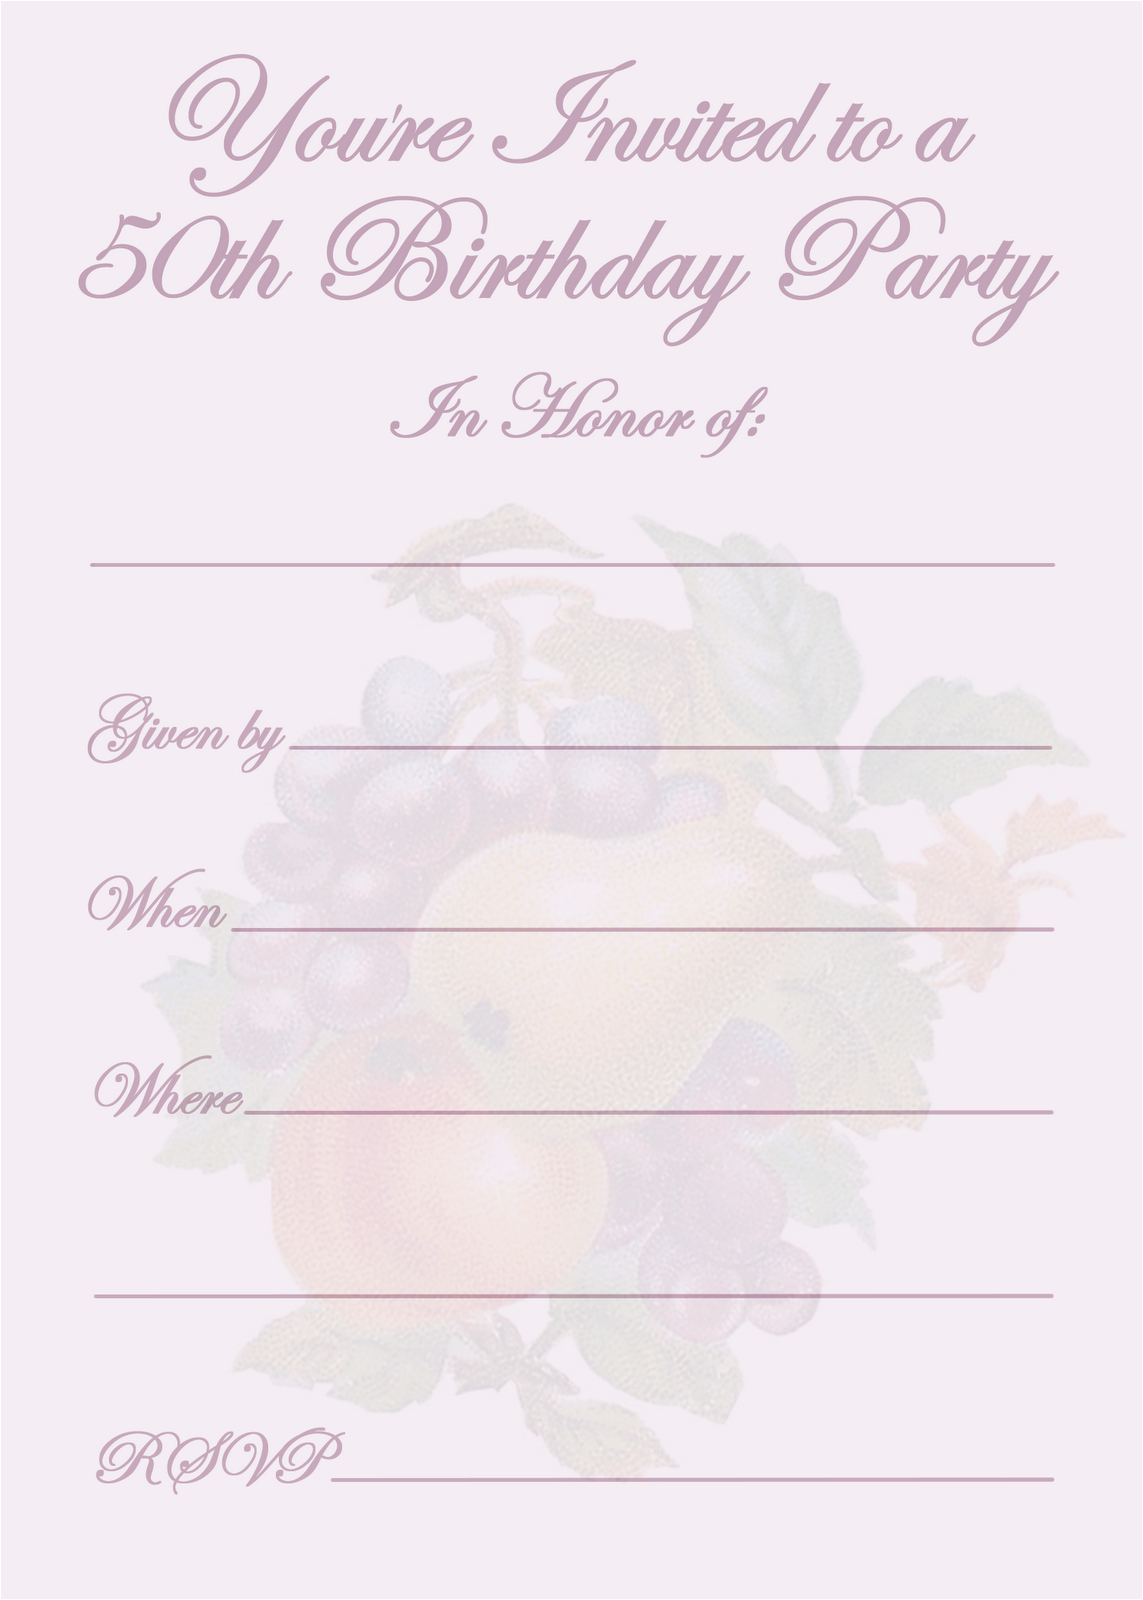 50th birthday invitations templates